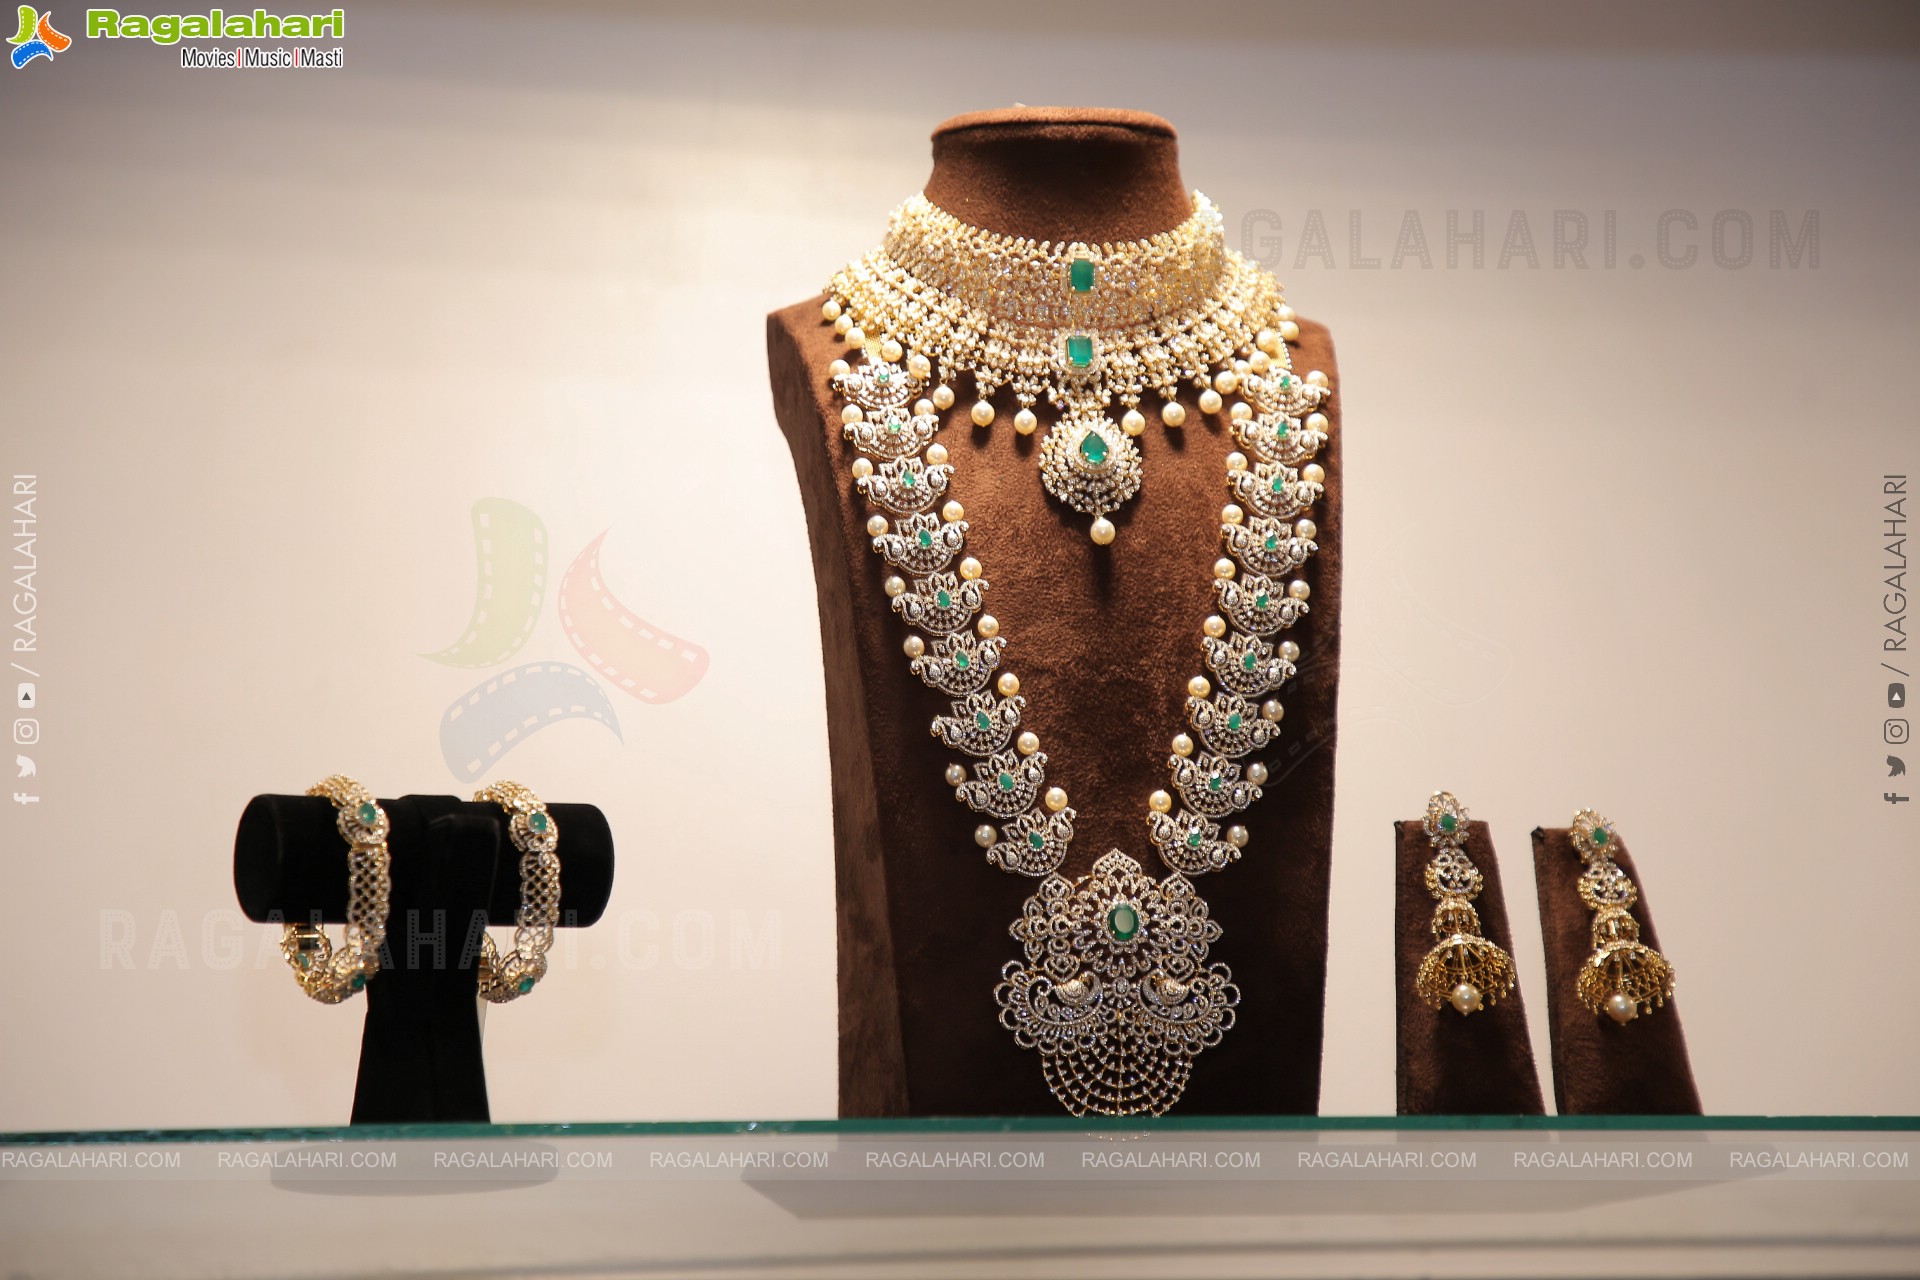 Radhika Diamonds  Exhibition Park Hyatt, Hyderabad